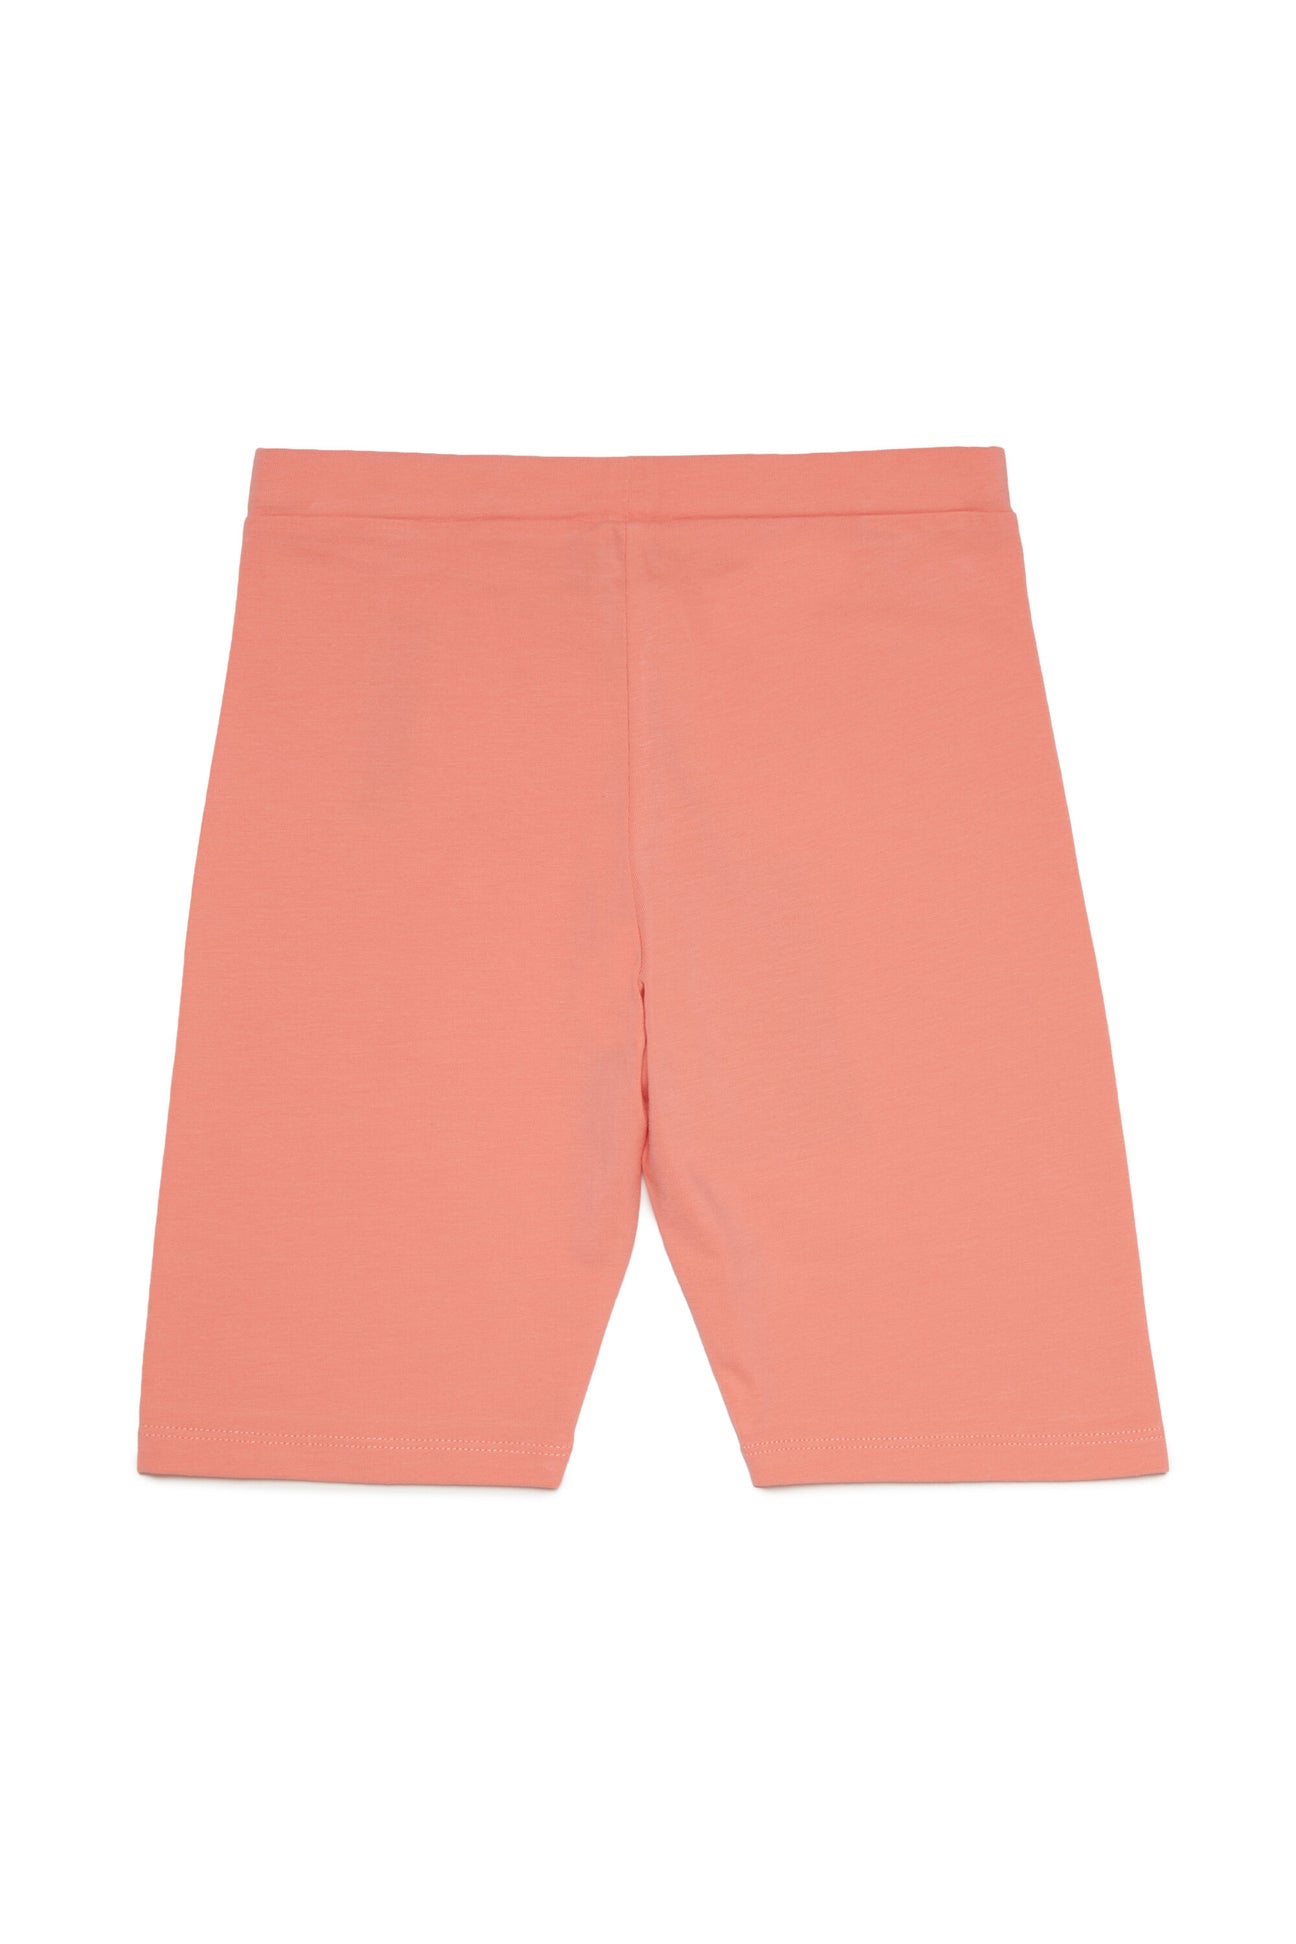 Orange pants / pantalon naranja  Orange pants outfit, Colorful fashion,  Coral pants